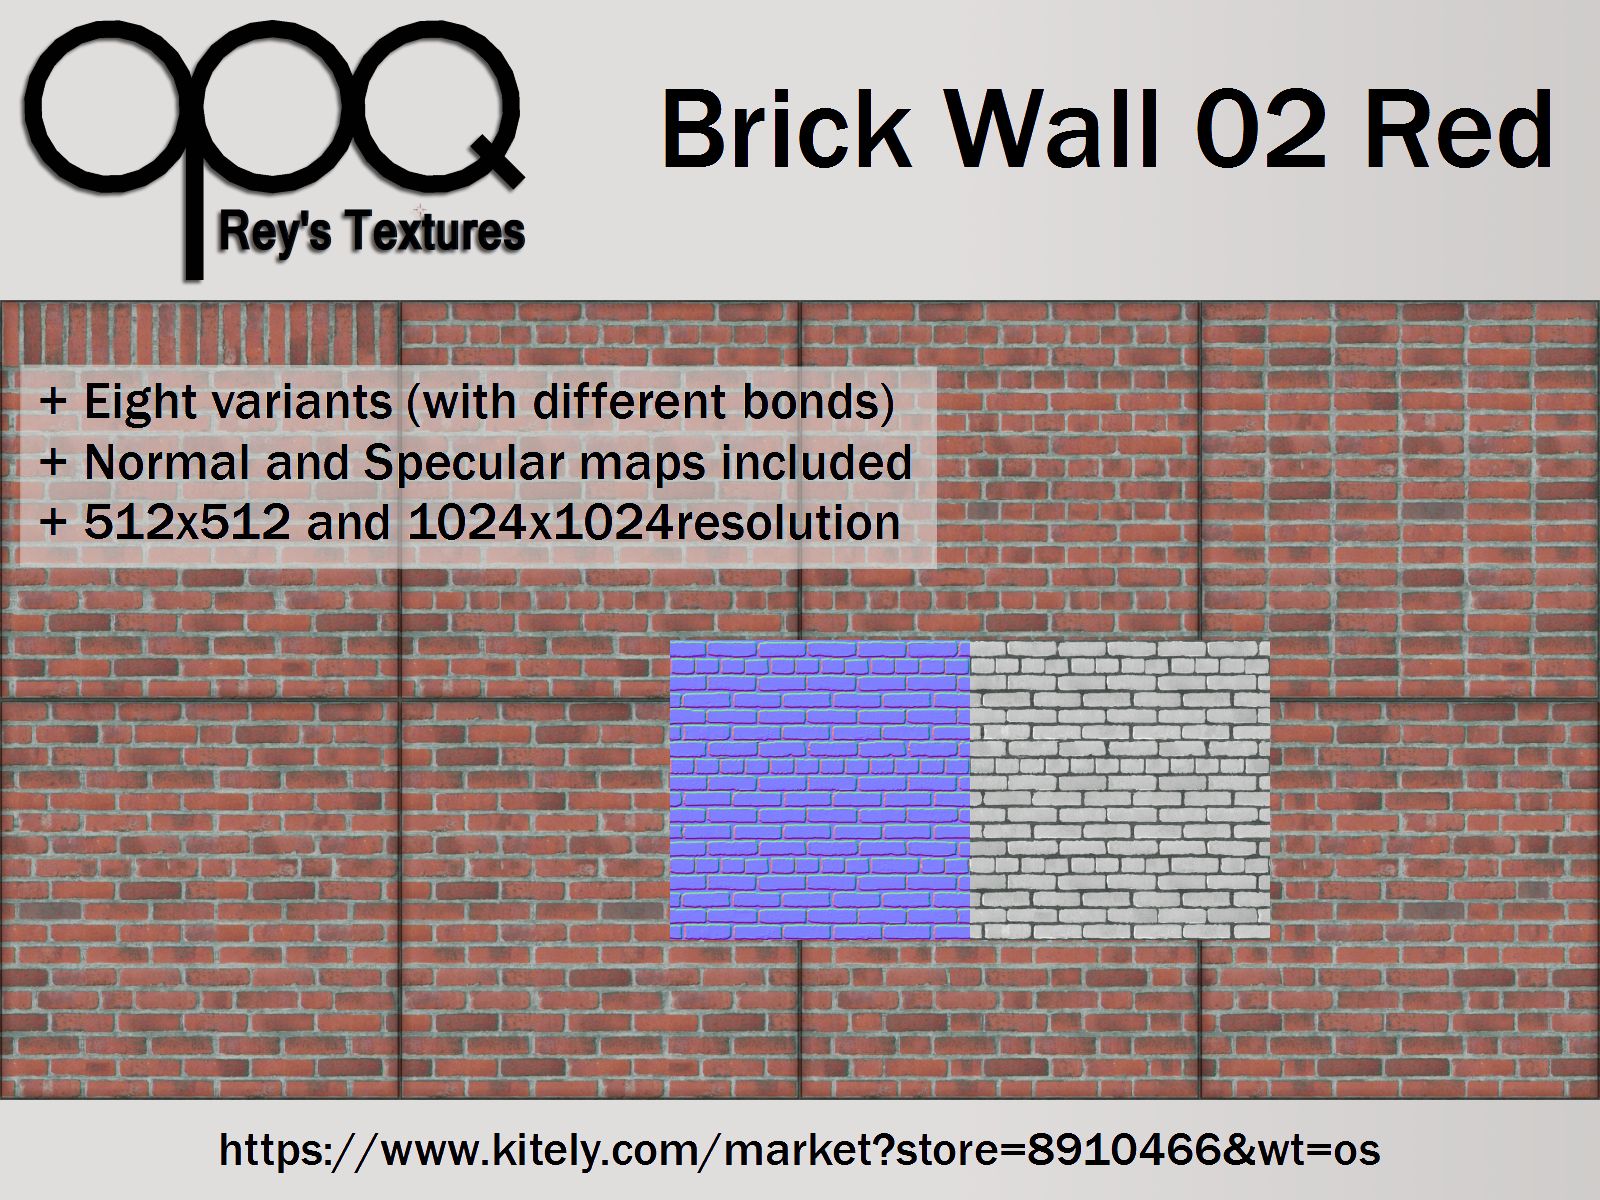 Rey's Brick Wall 02 Red Poster Kitely.jpg